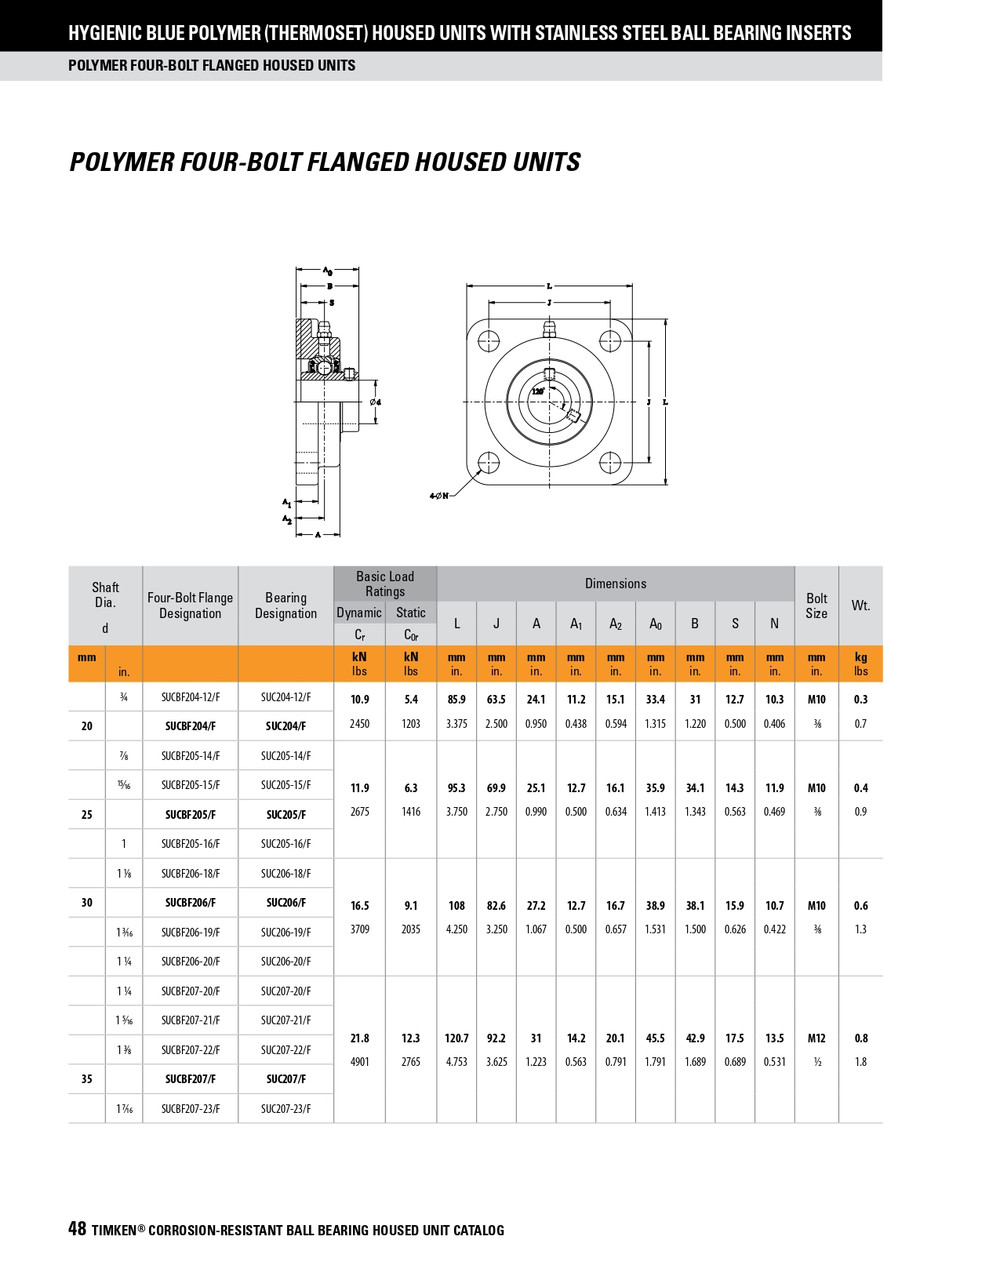 35mm Hygienic Polymer Set Screw Flange Block Assembly   SUCBF207/FVSL613